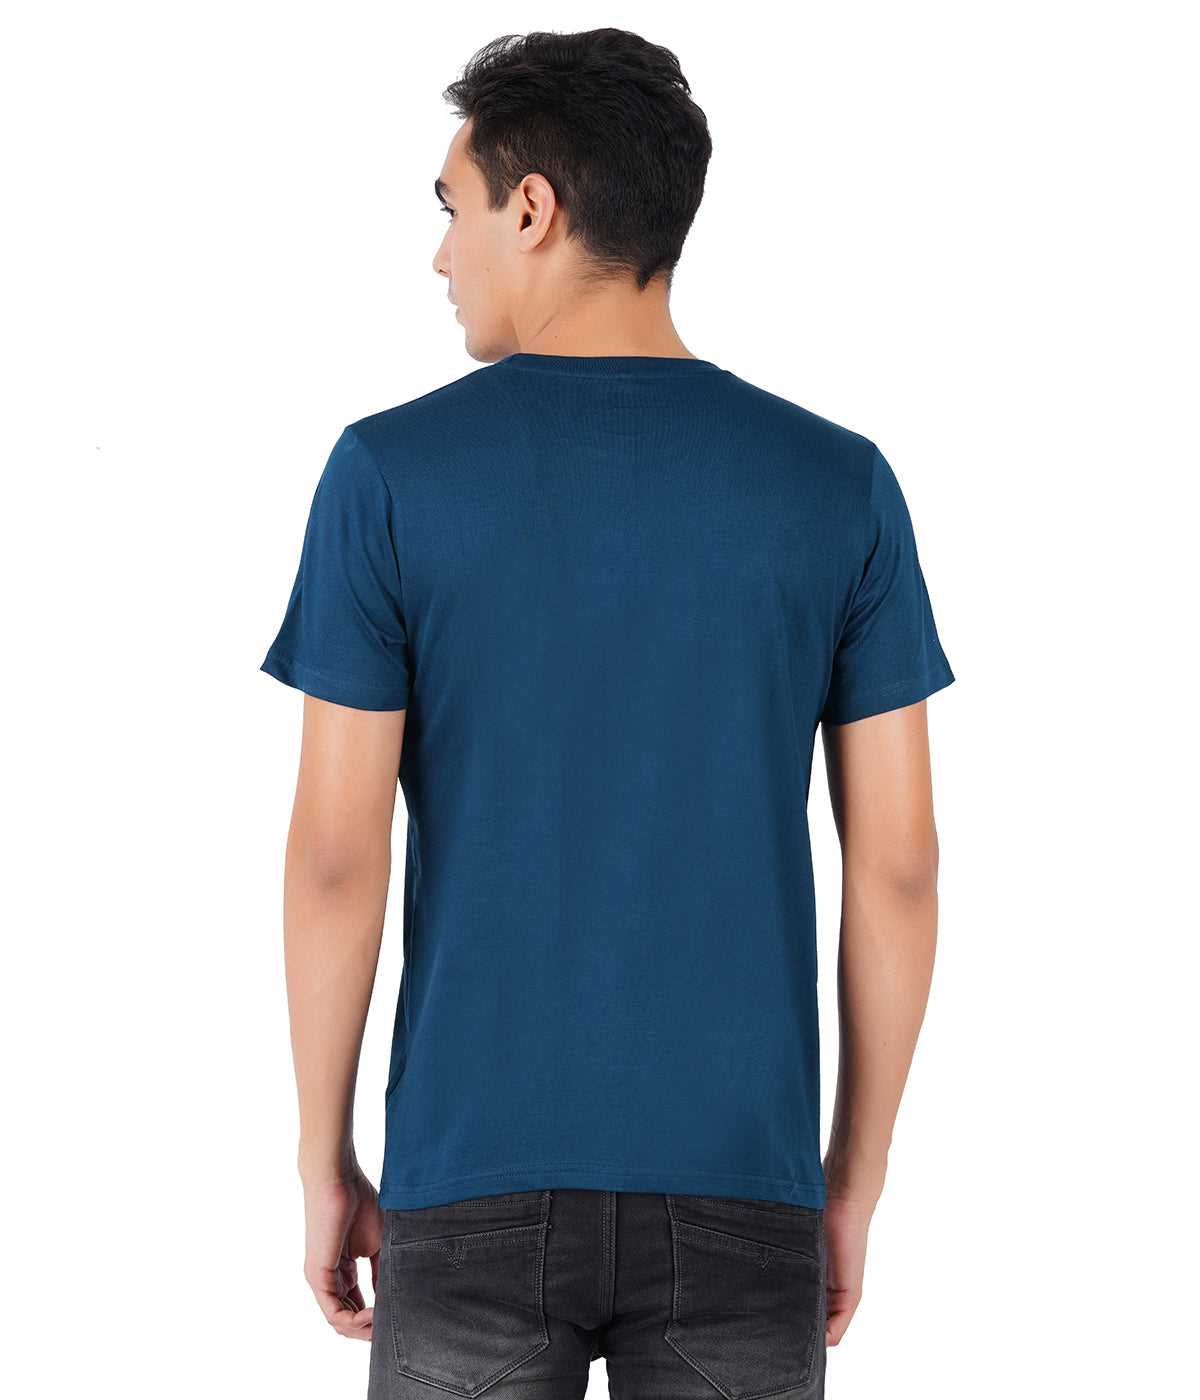 Buy round neck blue t-shirts online